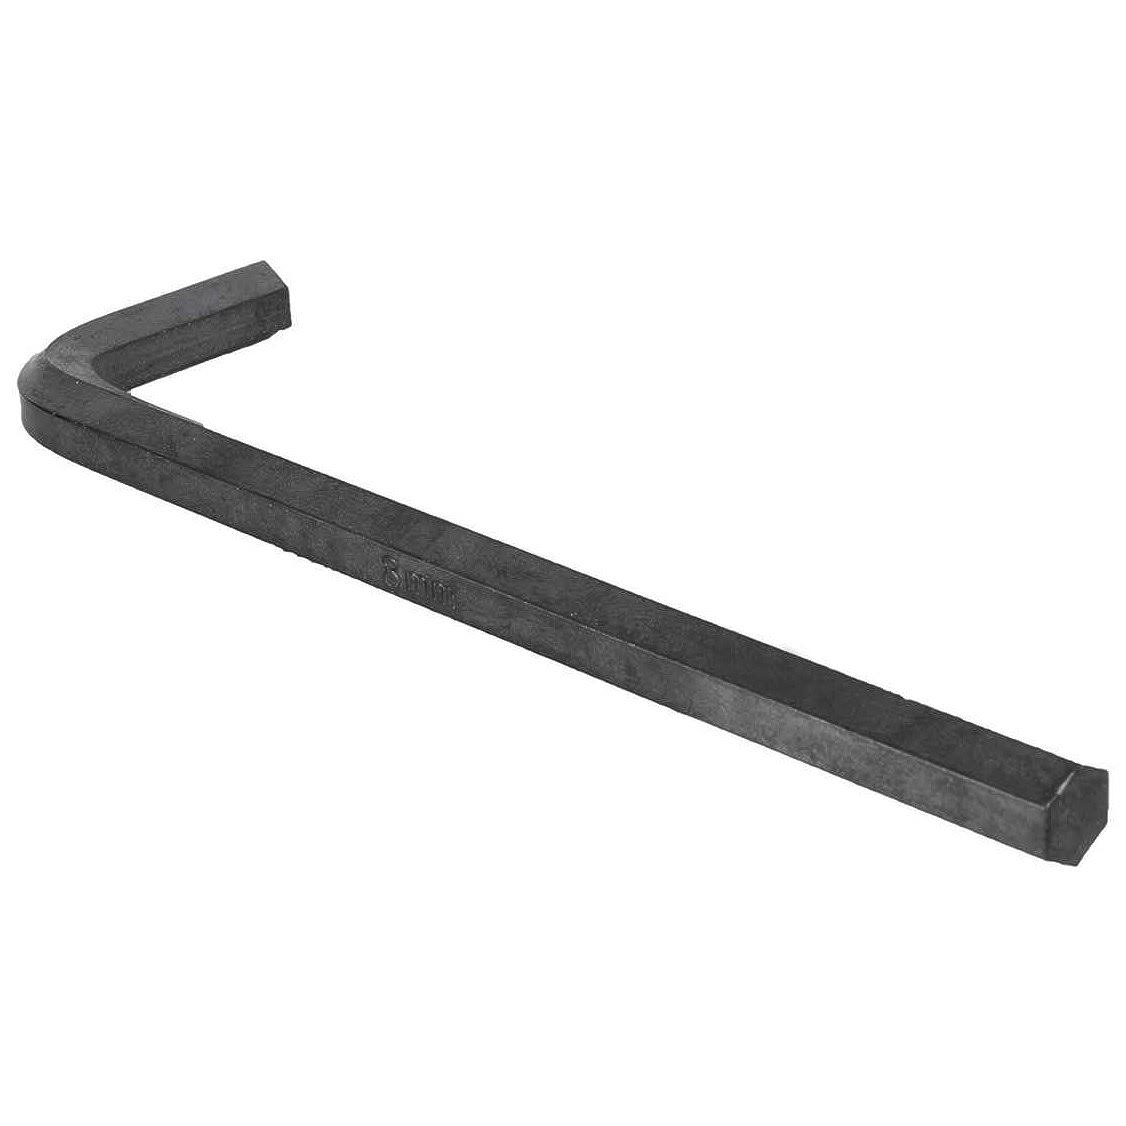 Sunlite Allen Wrench Hex Key - 8mm, Black